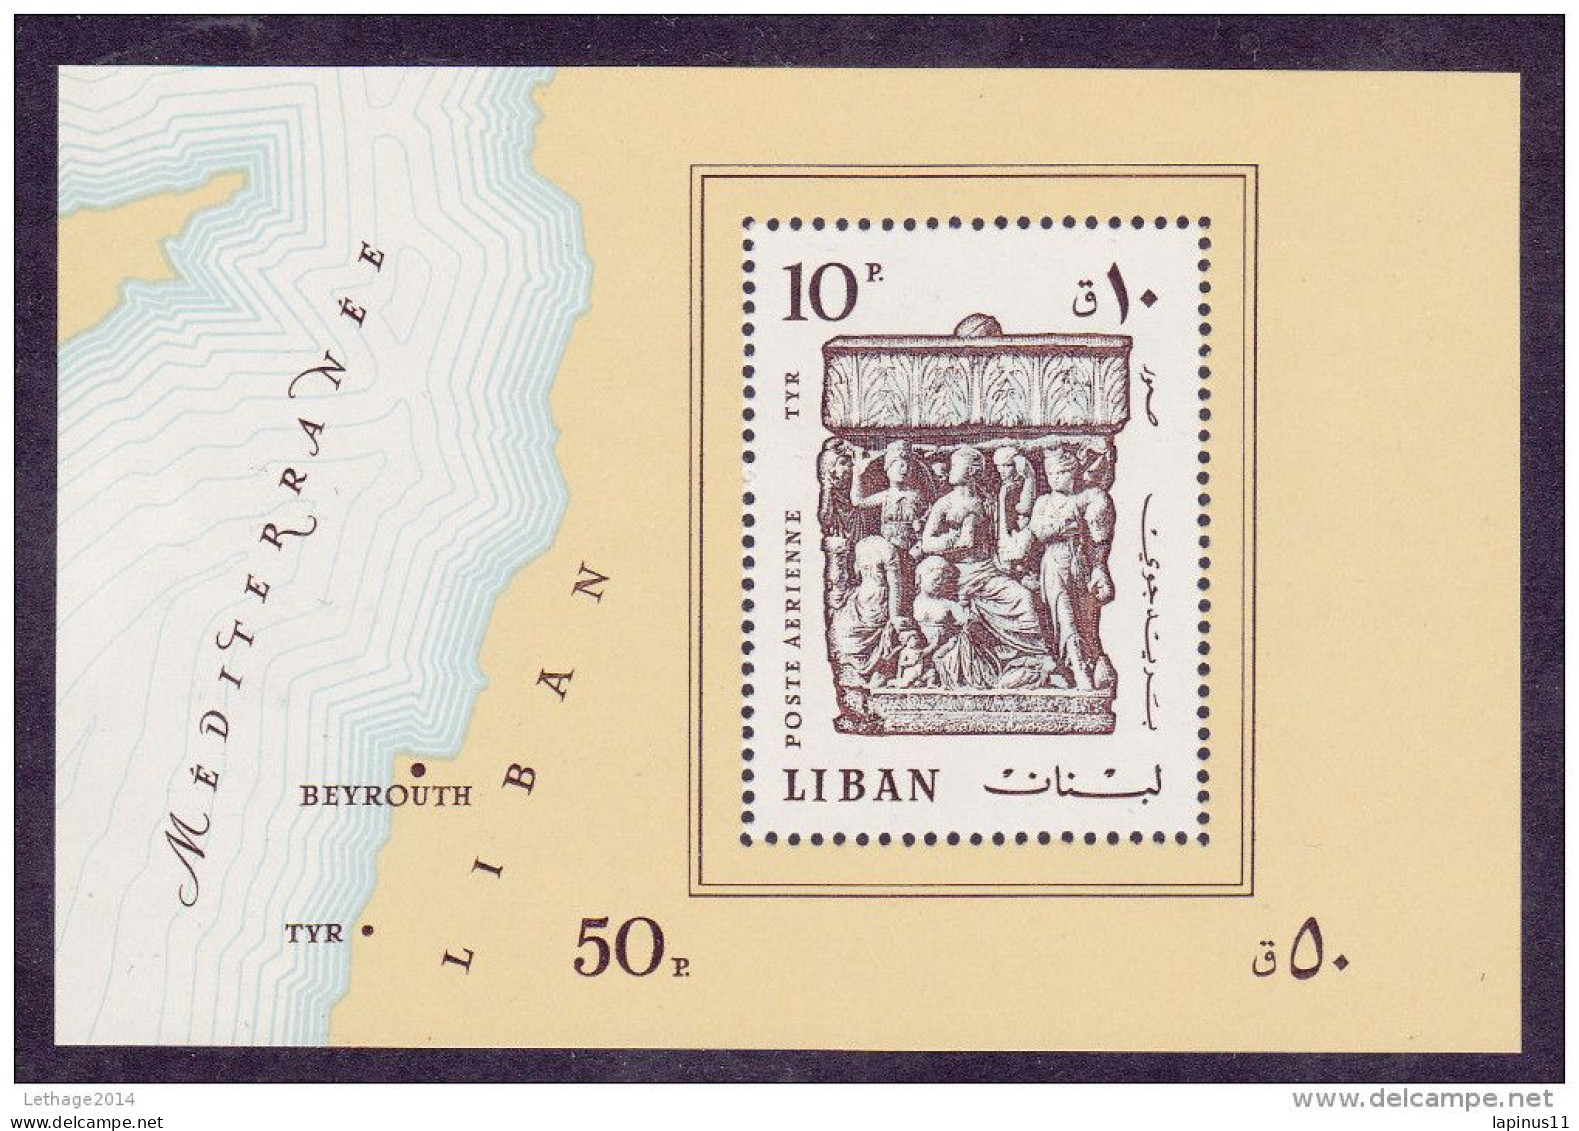 LEBANON LIBAN 1968 MNH OG Tyros Sheet Perf 10 3/4 X 11 3/4 Mi #37a - Libanon